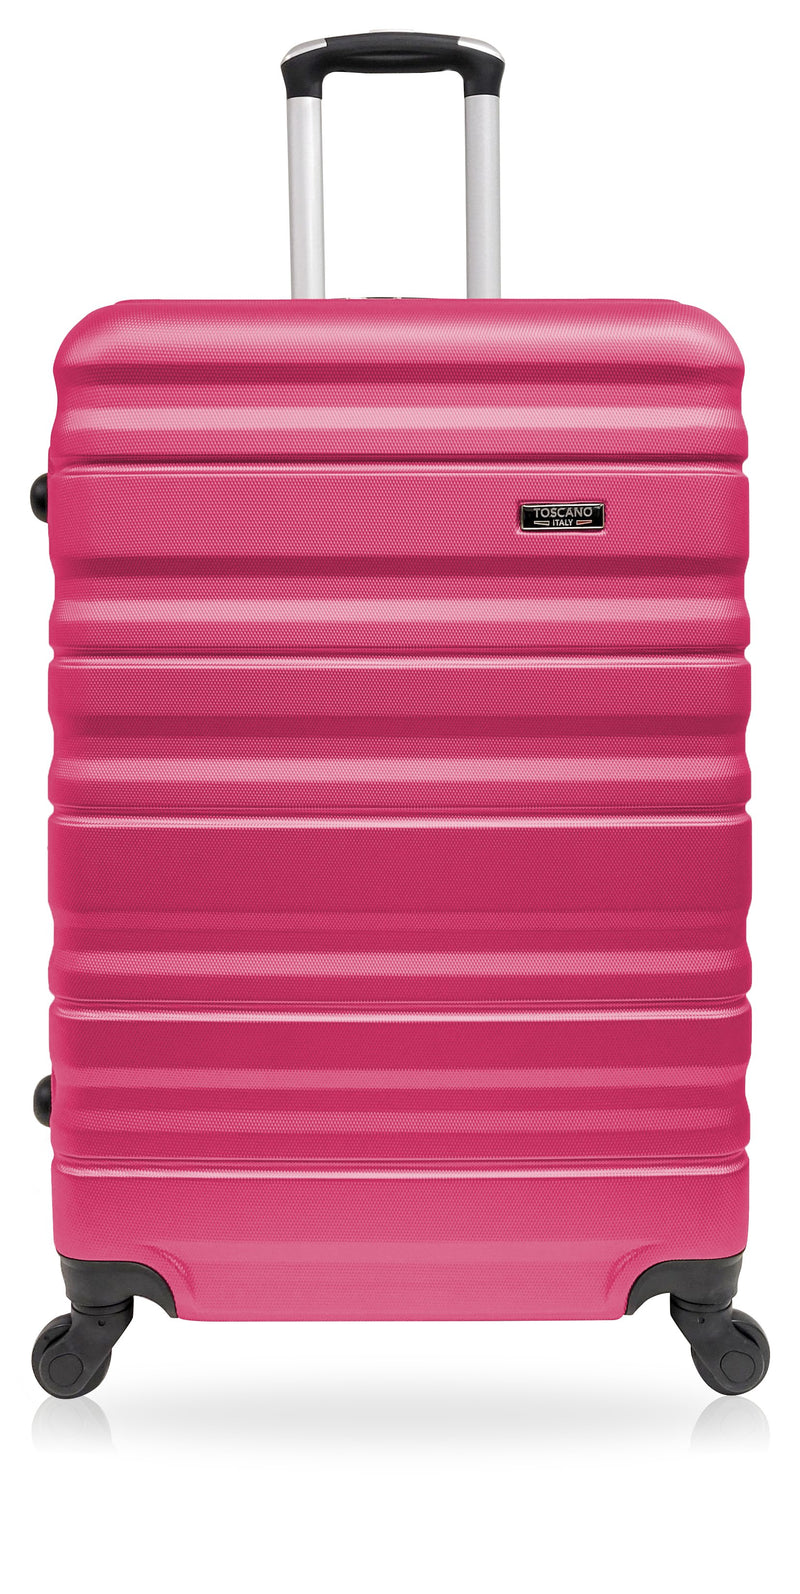 TOSCANO 26-inch Barre Hardside Lightweight Luggage Suitcase